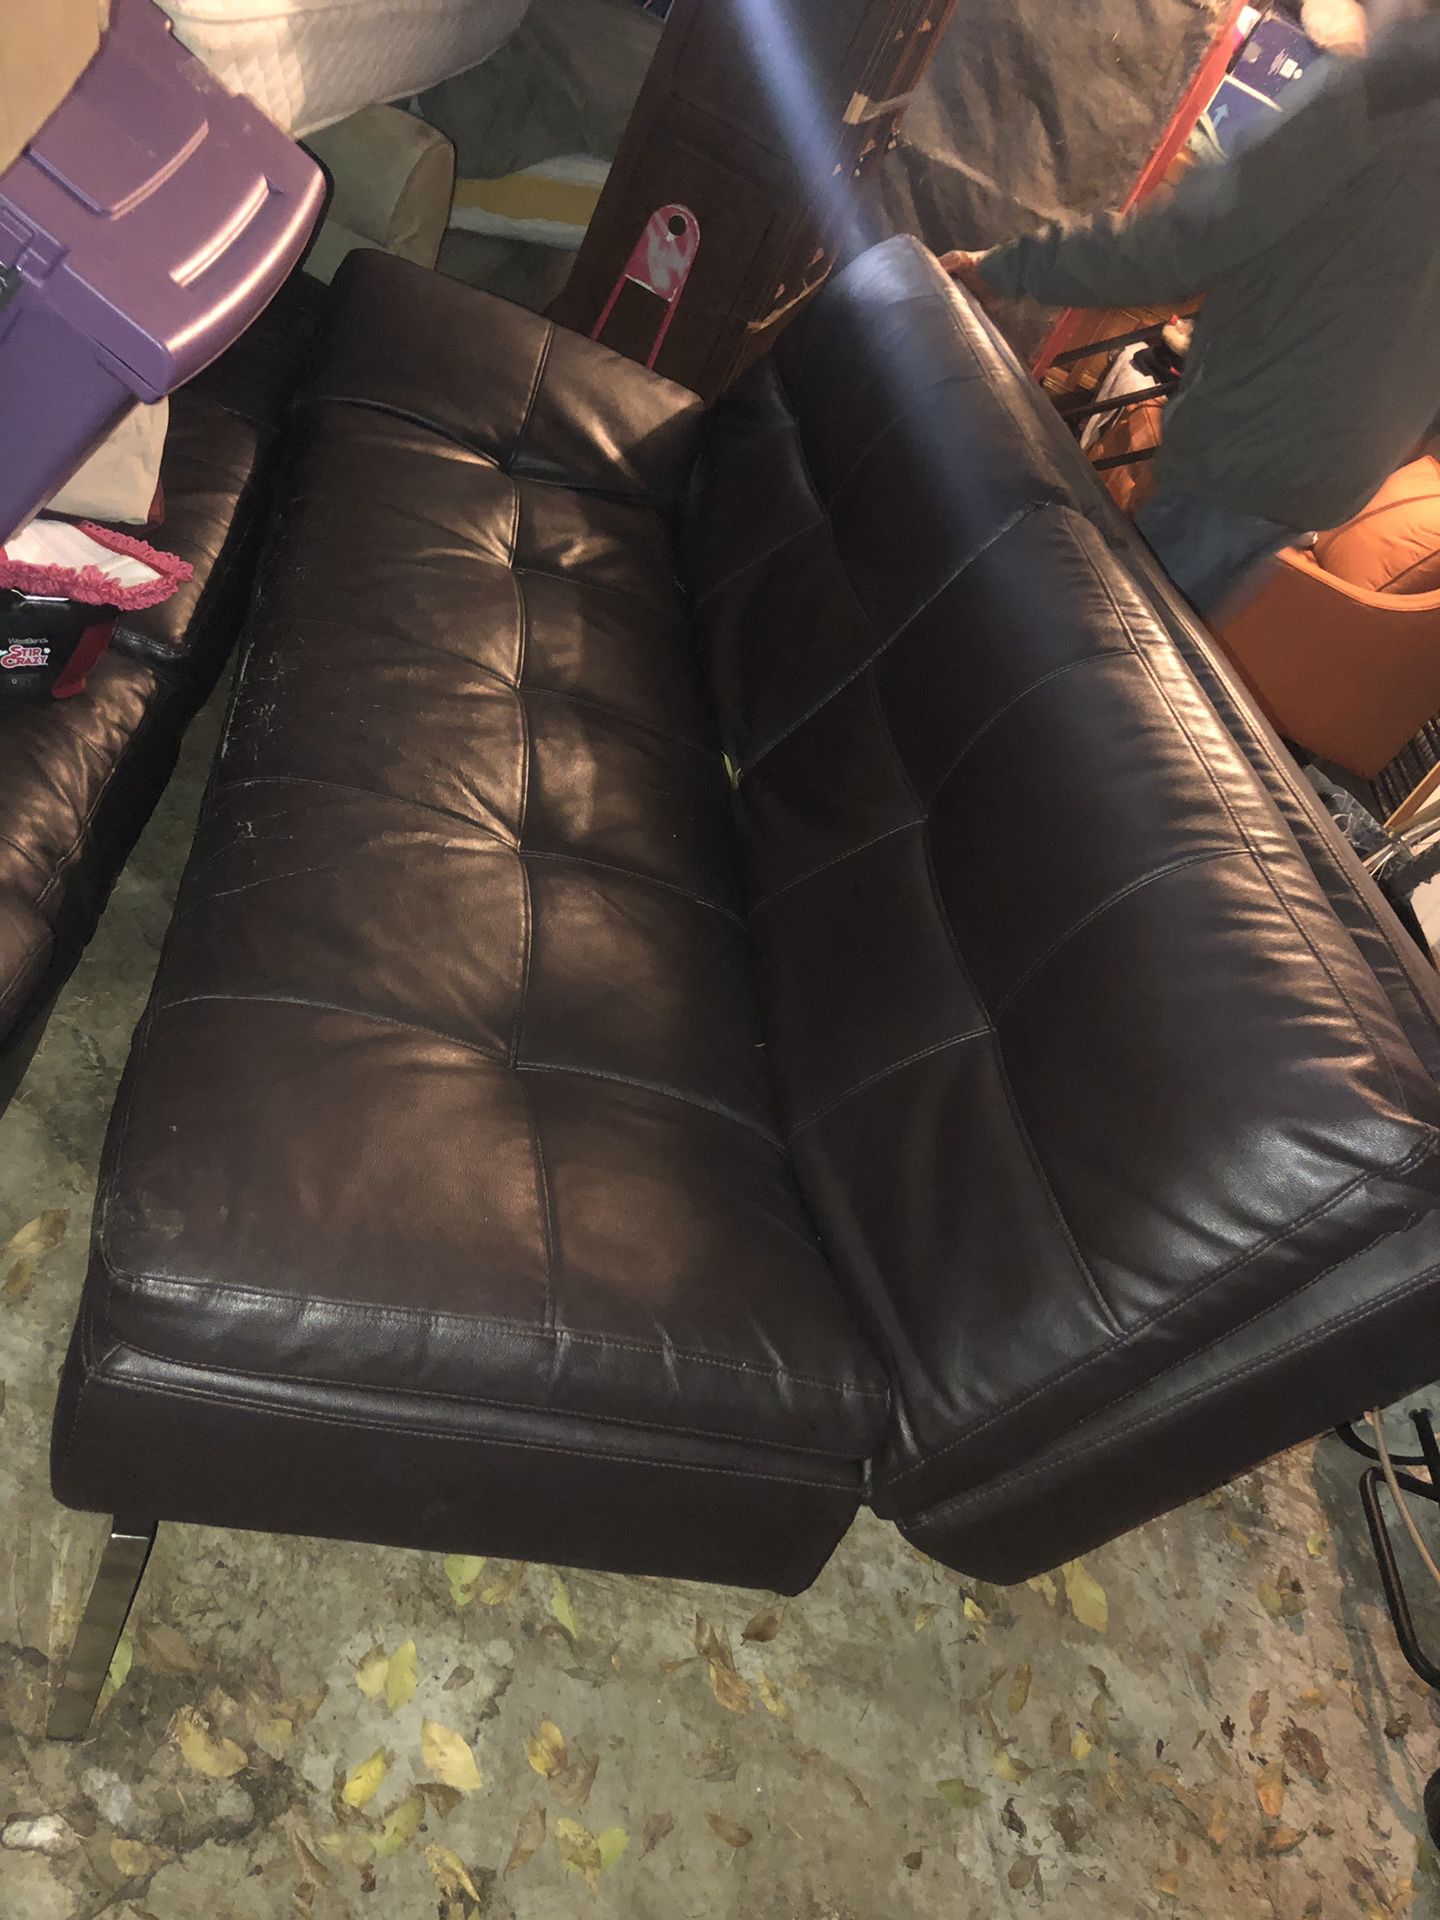 IKEA nice black leather sleeper sofa,flattens into a bed,chic chrome legs